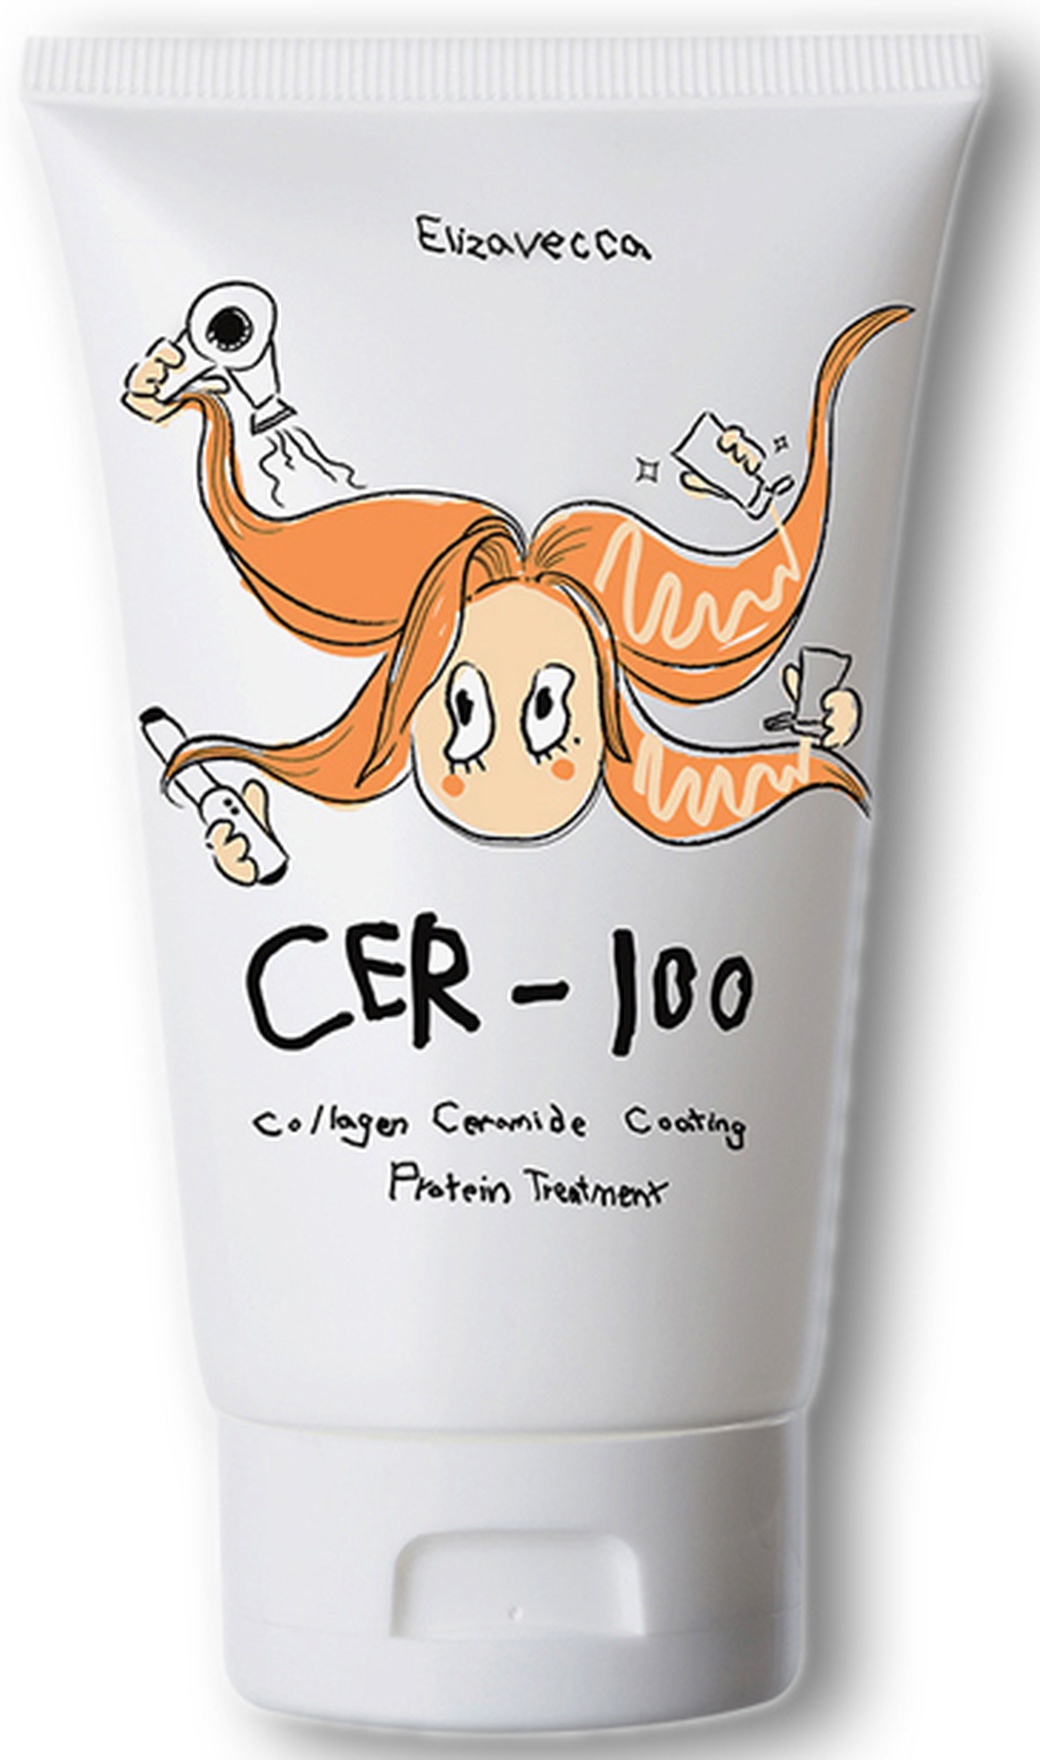 Elizavecca Коллагеновая маска для волос Cer-100 Collagen Ceramide Coating Protein Treatment фото